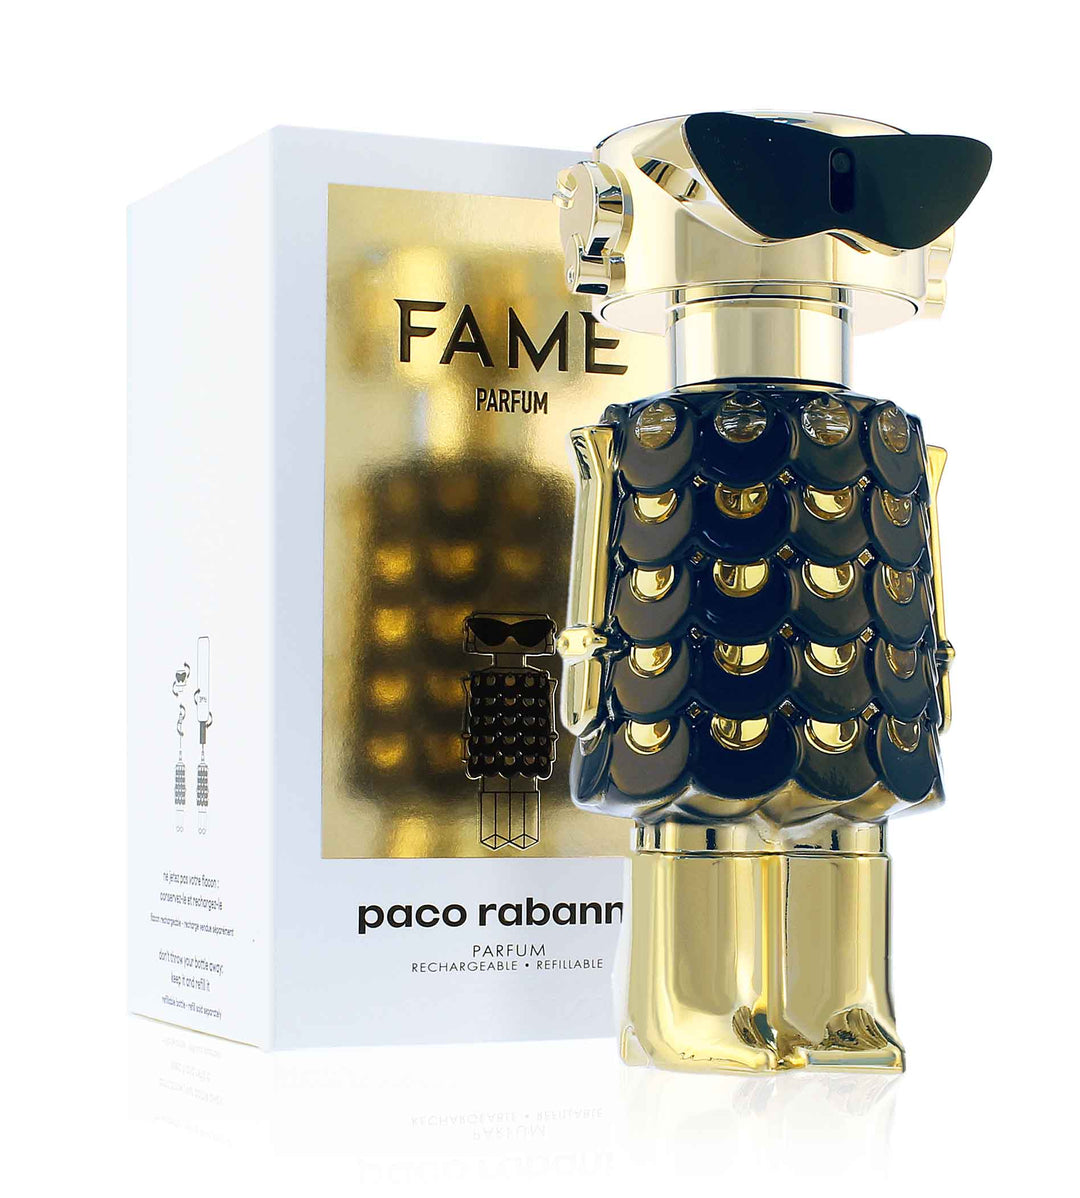 PACO RABANNE  Fame Parfum Edp Vapor Refillable 80 ml